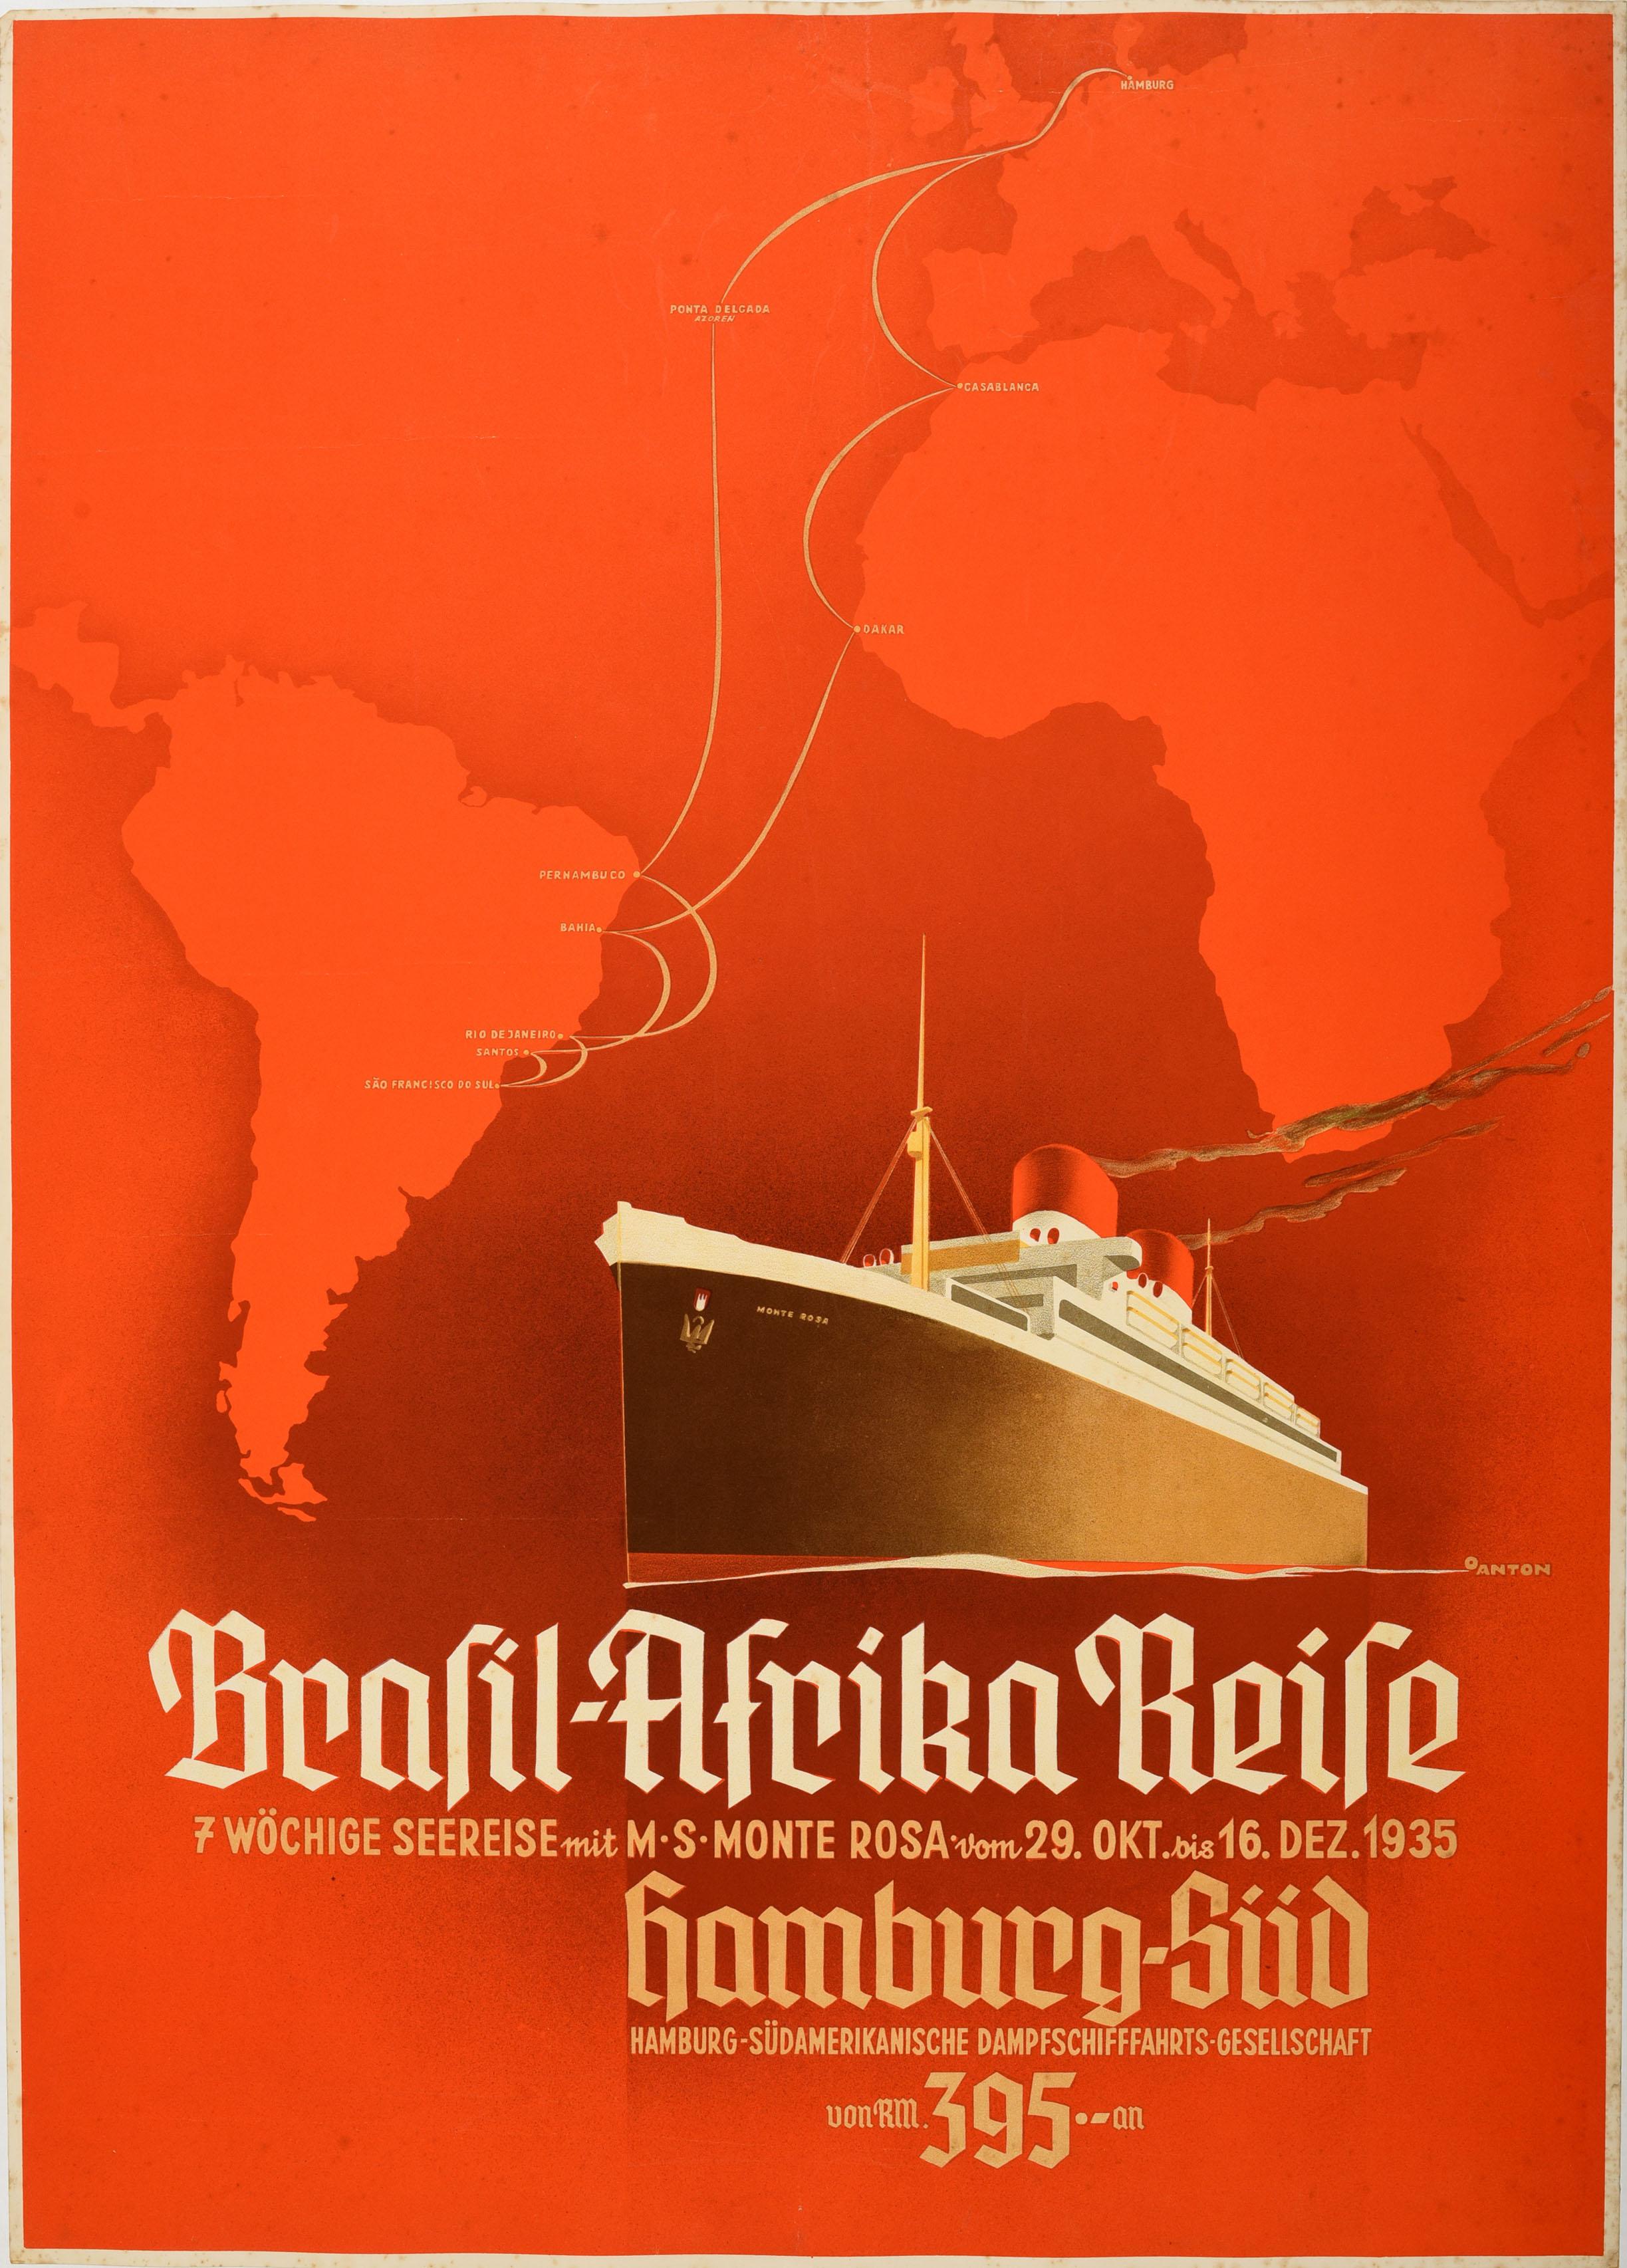 Ottomar Anton Print - Original Vintage Poster Brasil Africa Reise Cruise Travel Hamburg Sud Windrush